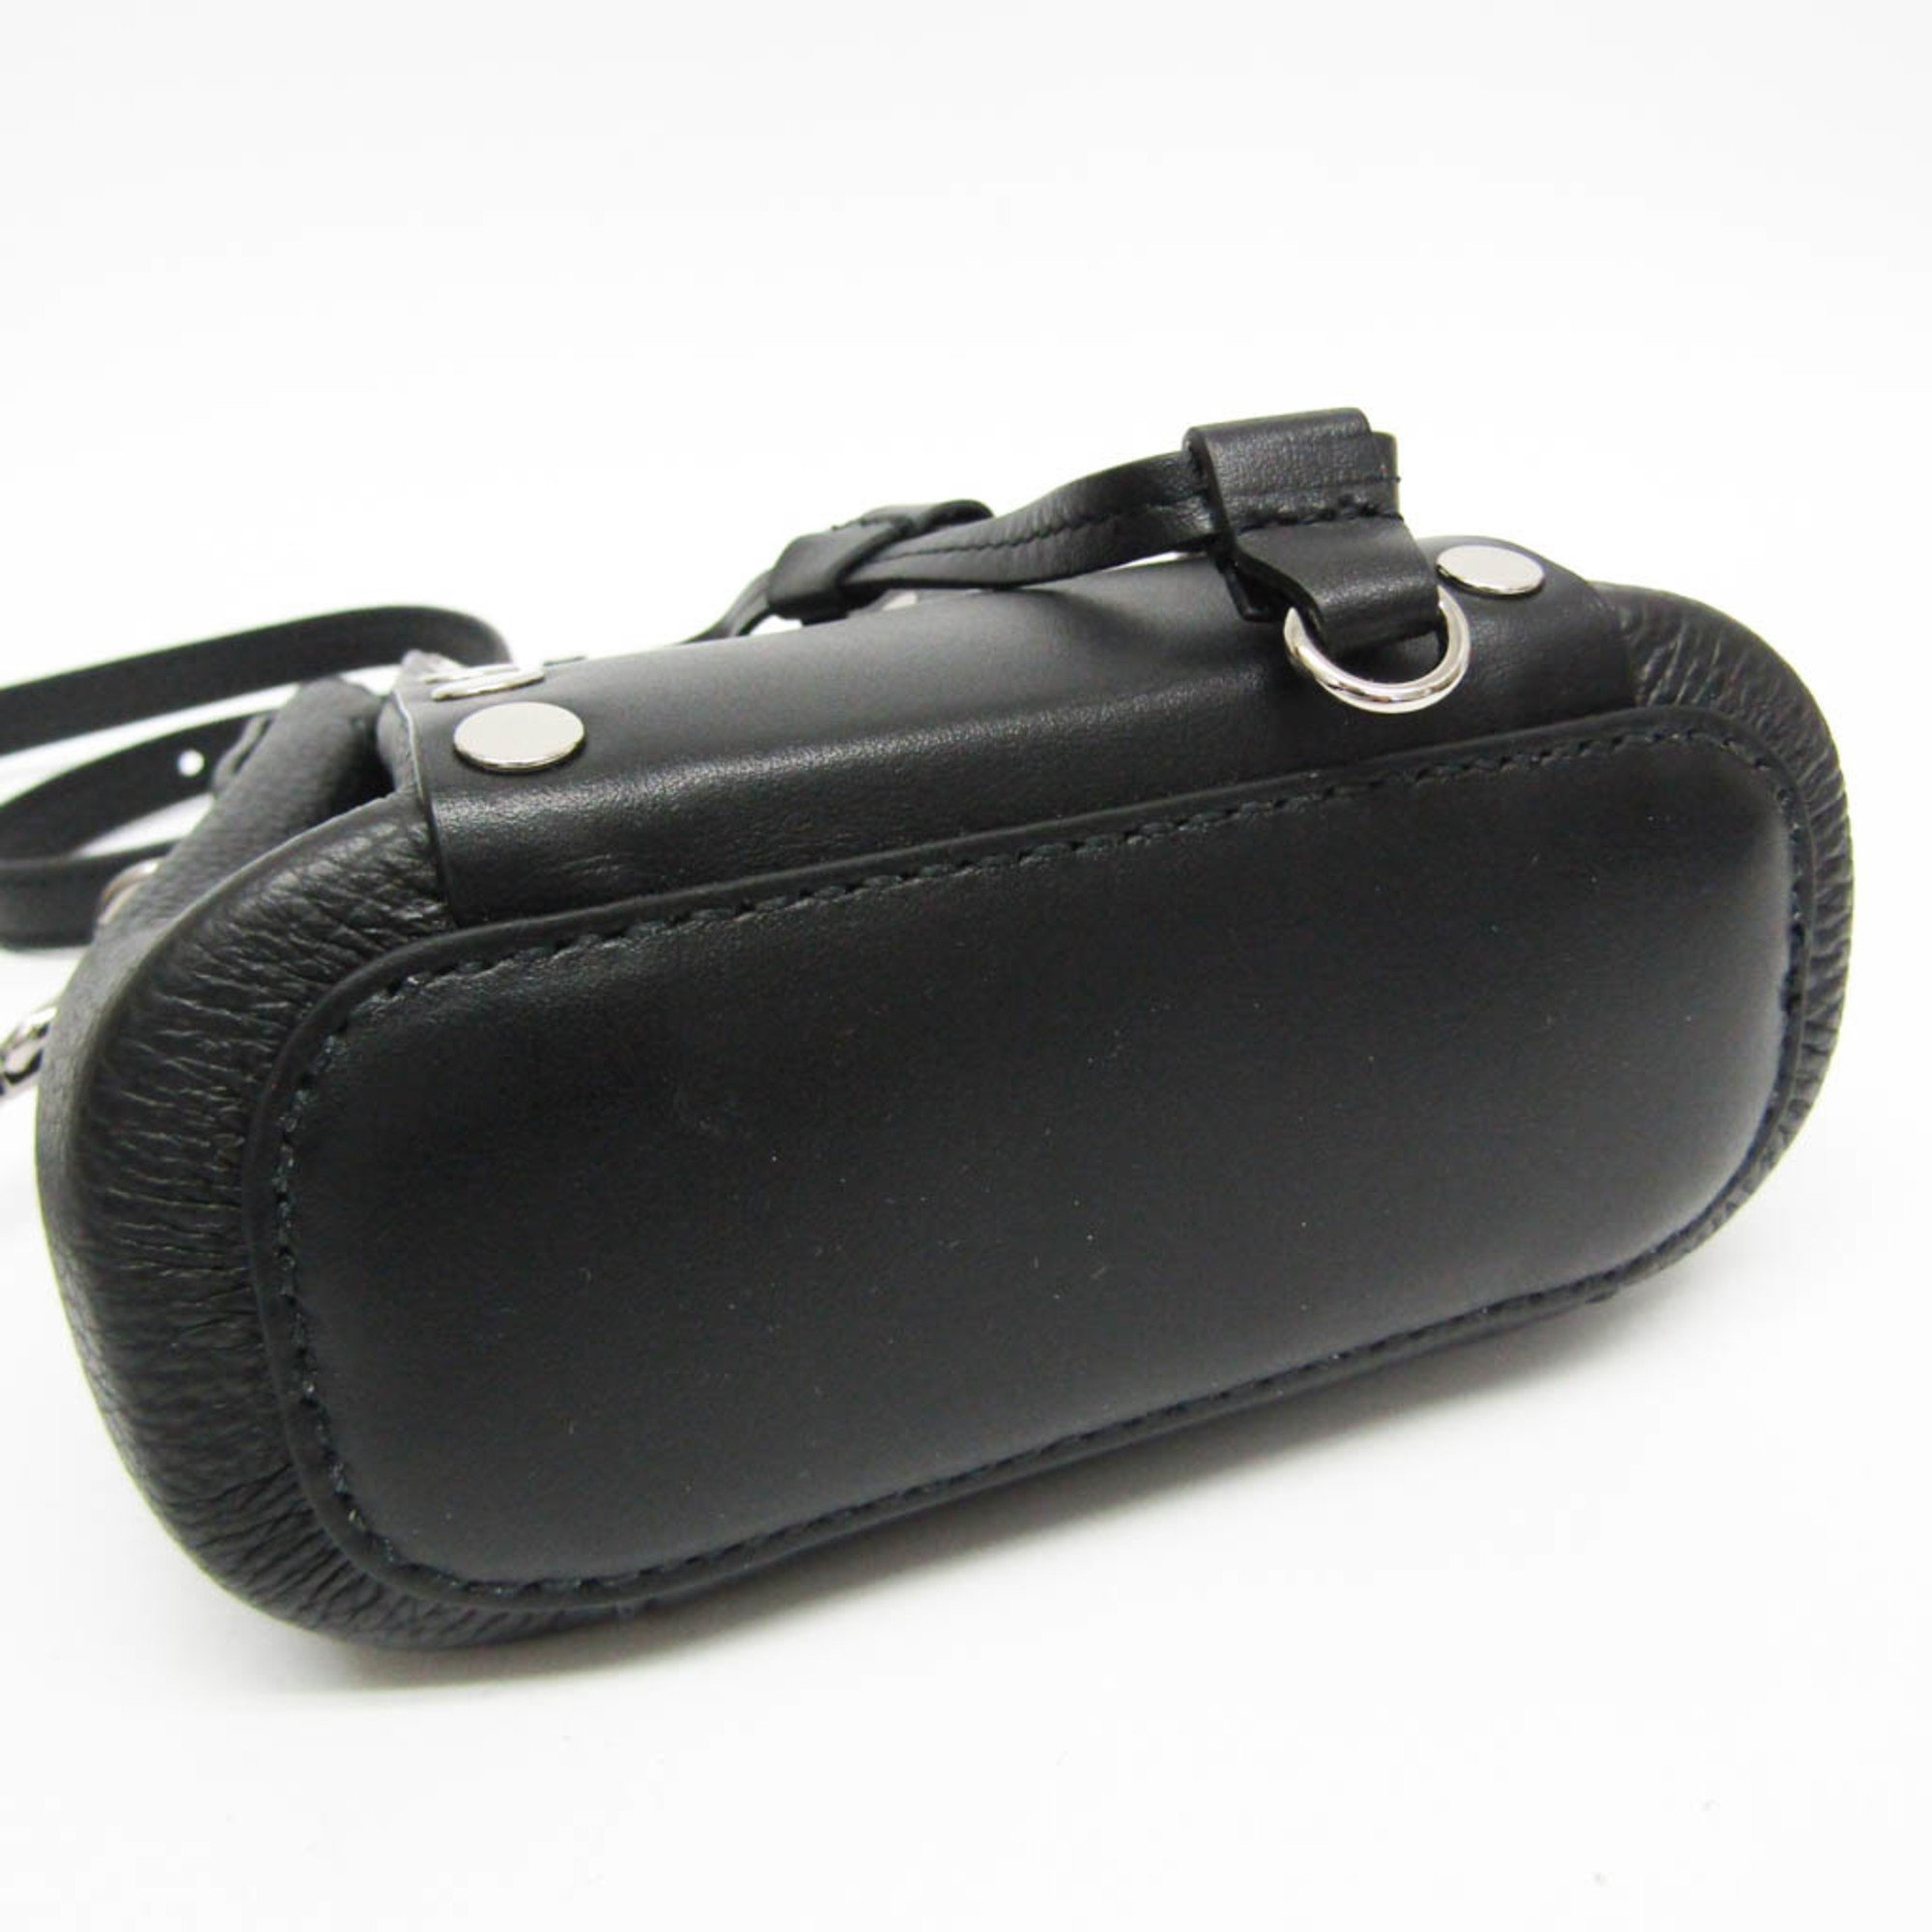 Furla Myastella WB00592 Women's Leather Handbag,Shoulder Bag Black